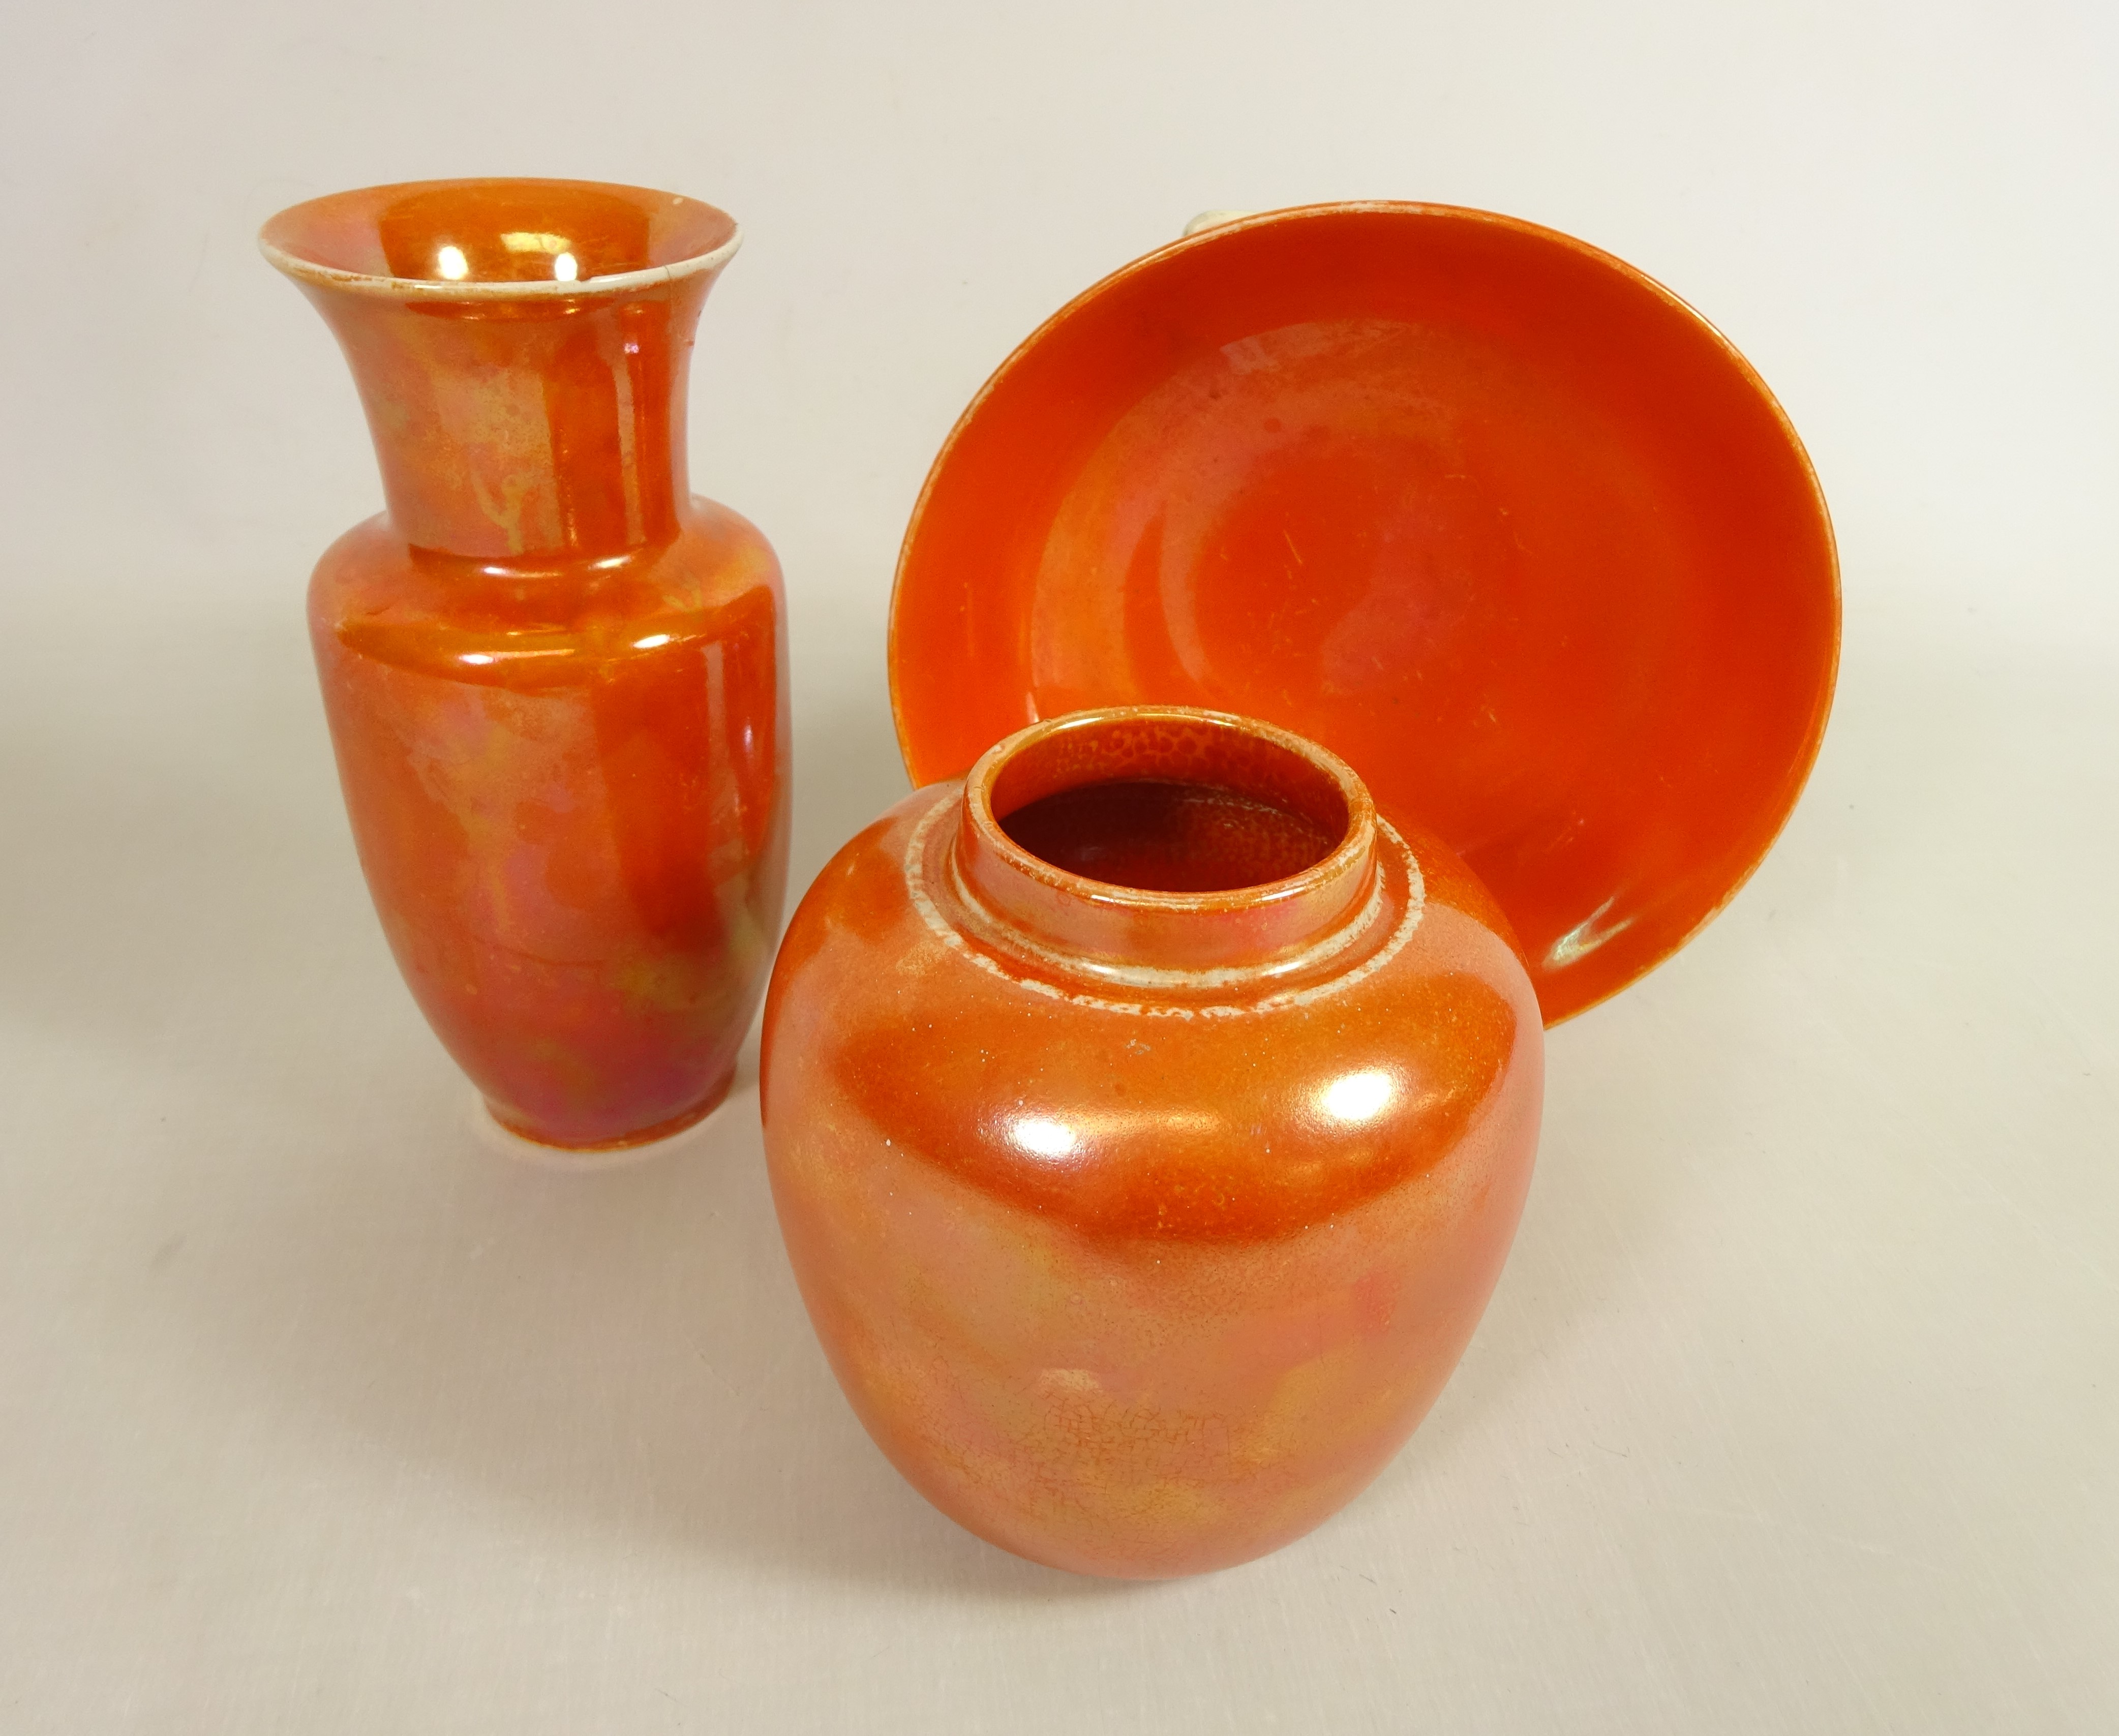 Ruskin orange lustre vase with flared neck, impressed 'Ruskin 1922' H15cm,